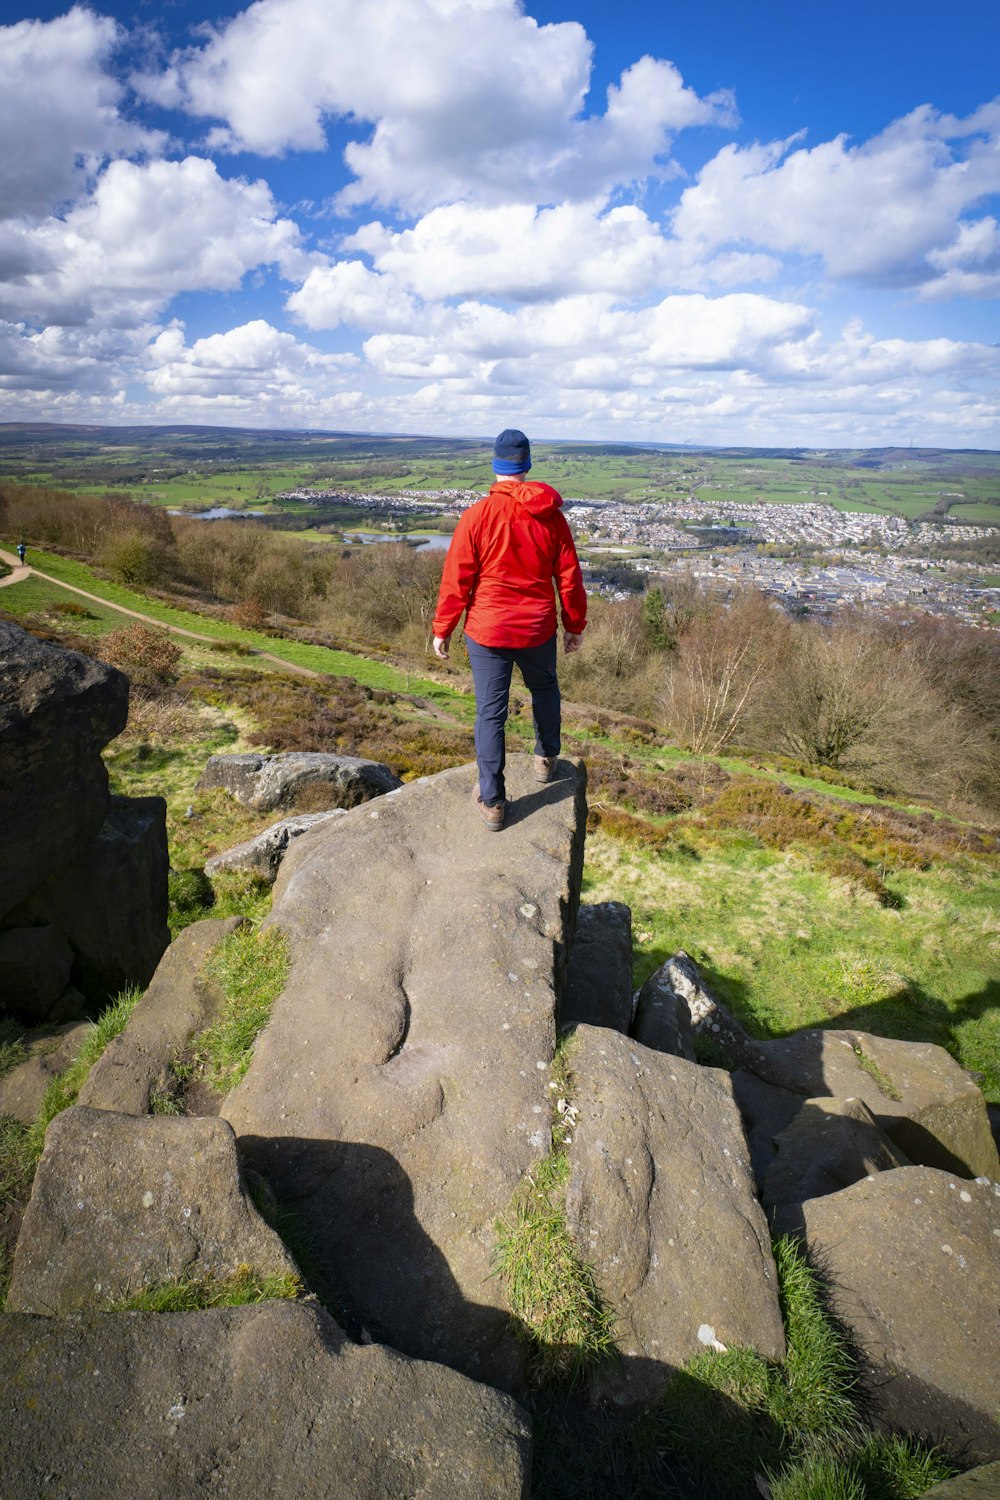 a man in a red jacket is walking on a rock